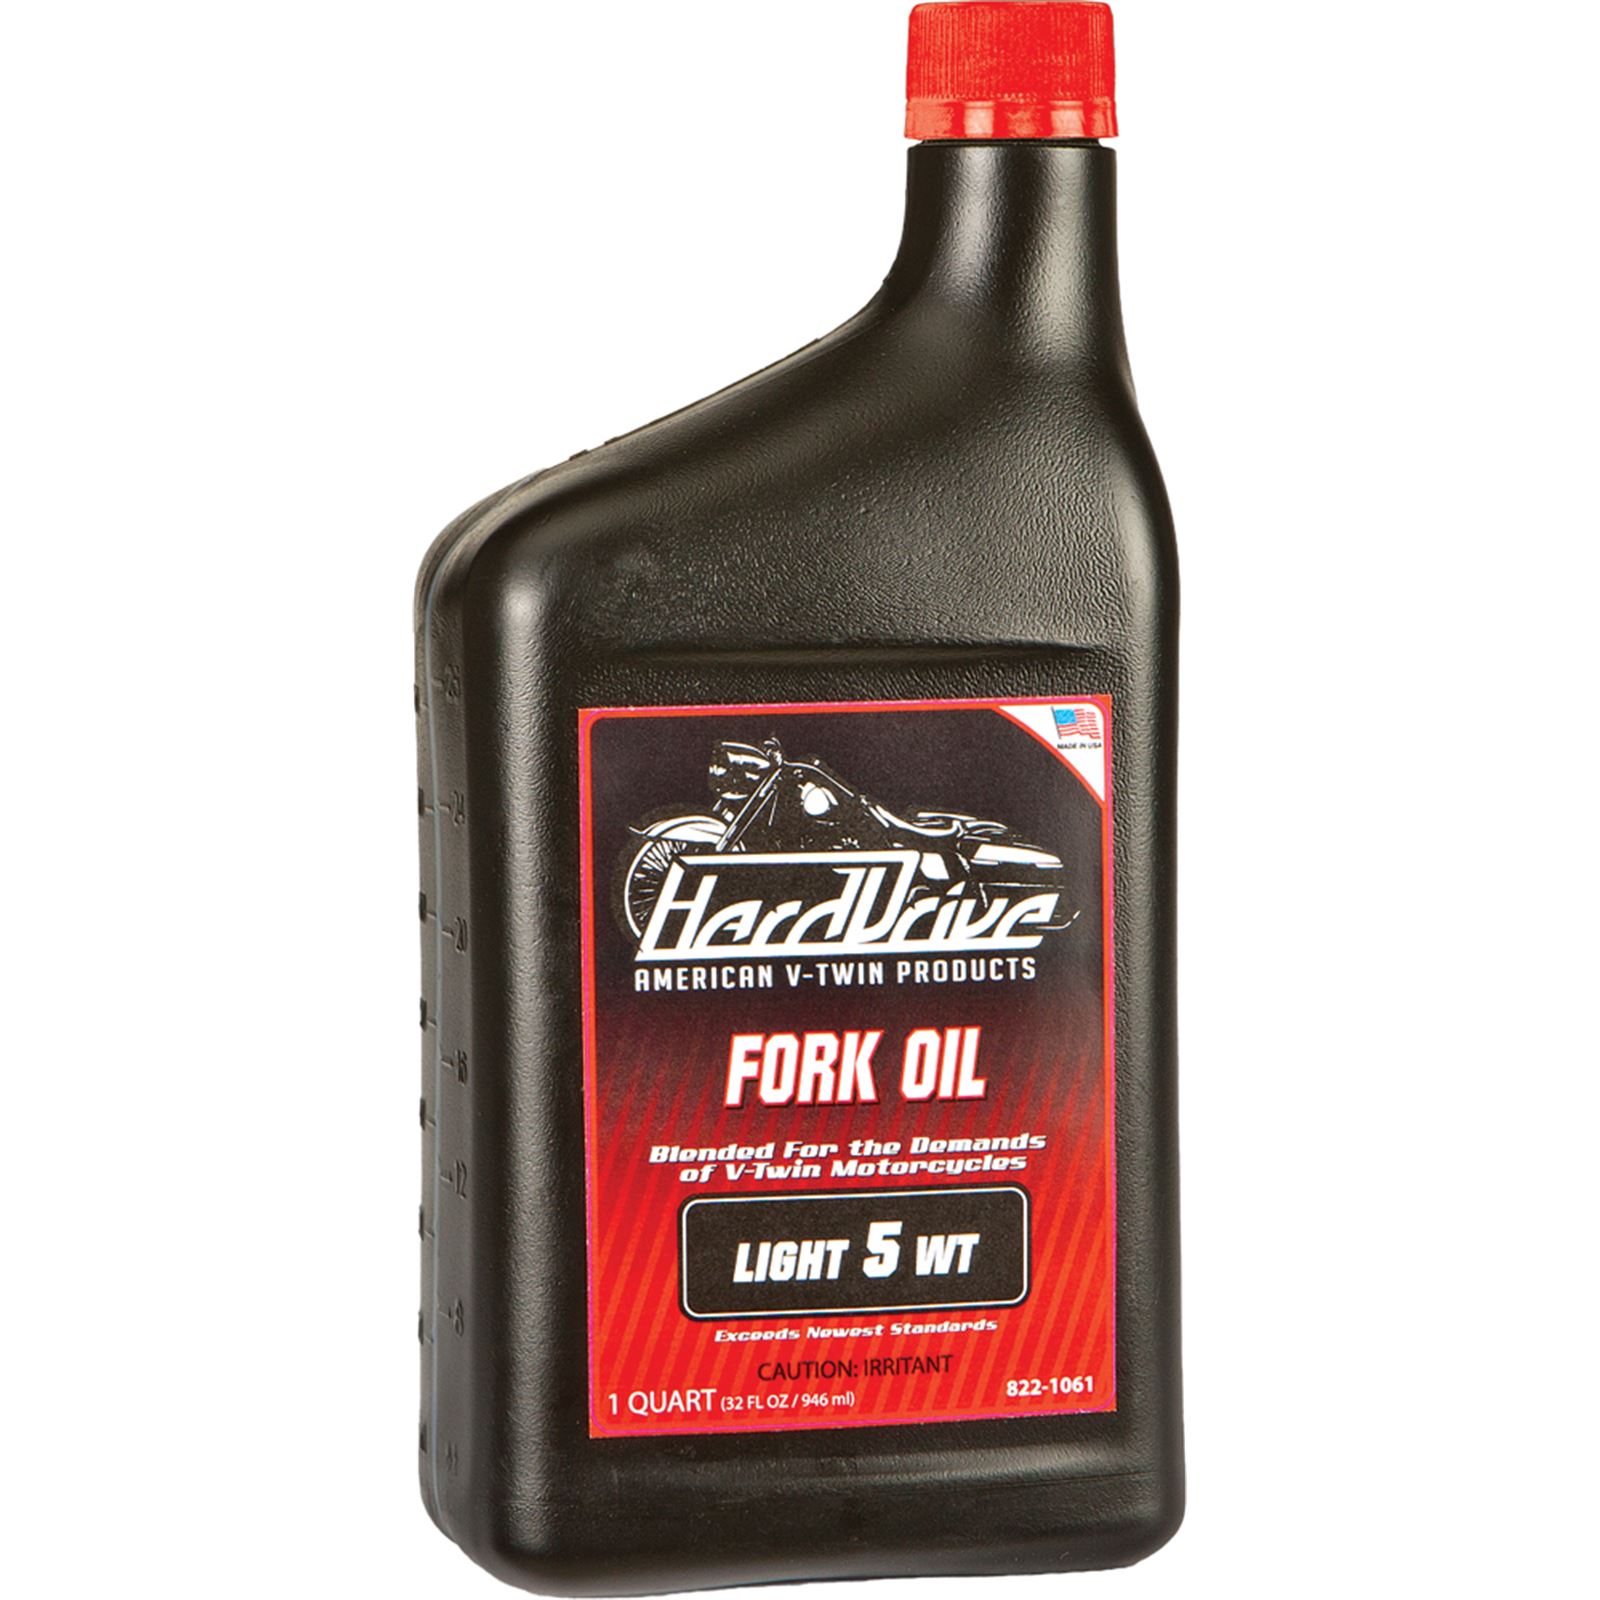 Harddrive Fork Oil